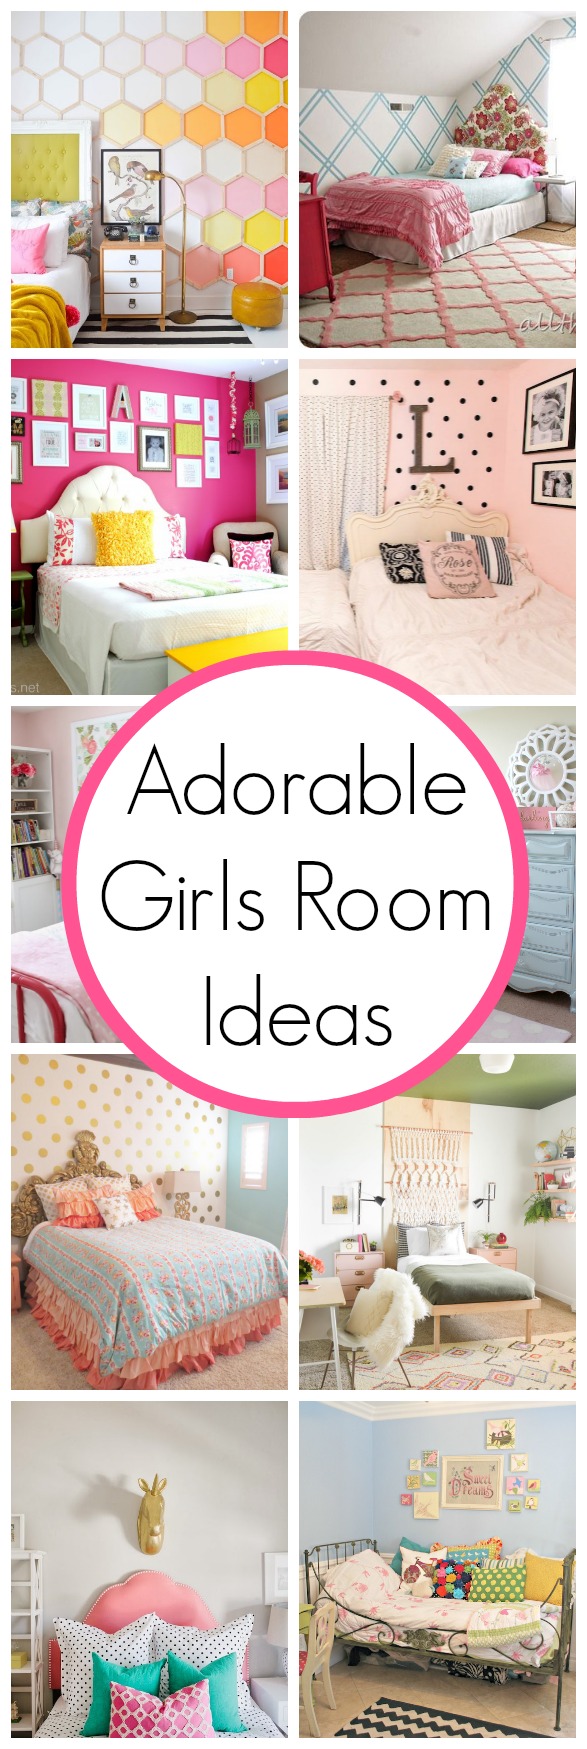 Girls Room Ideas